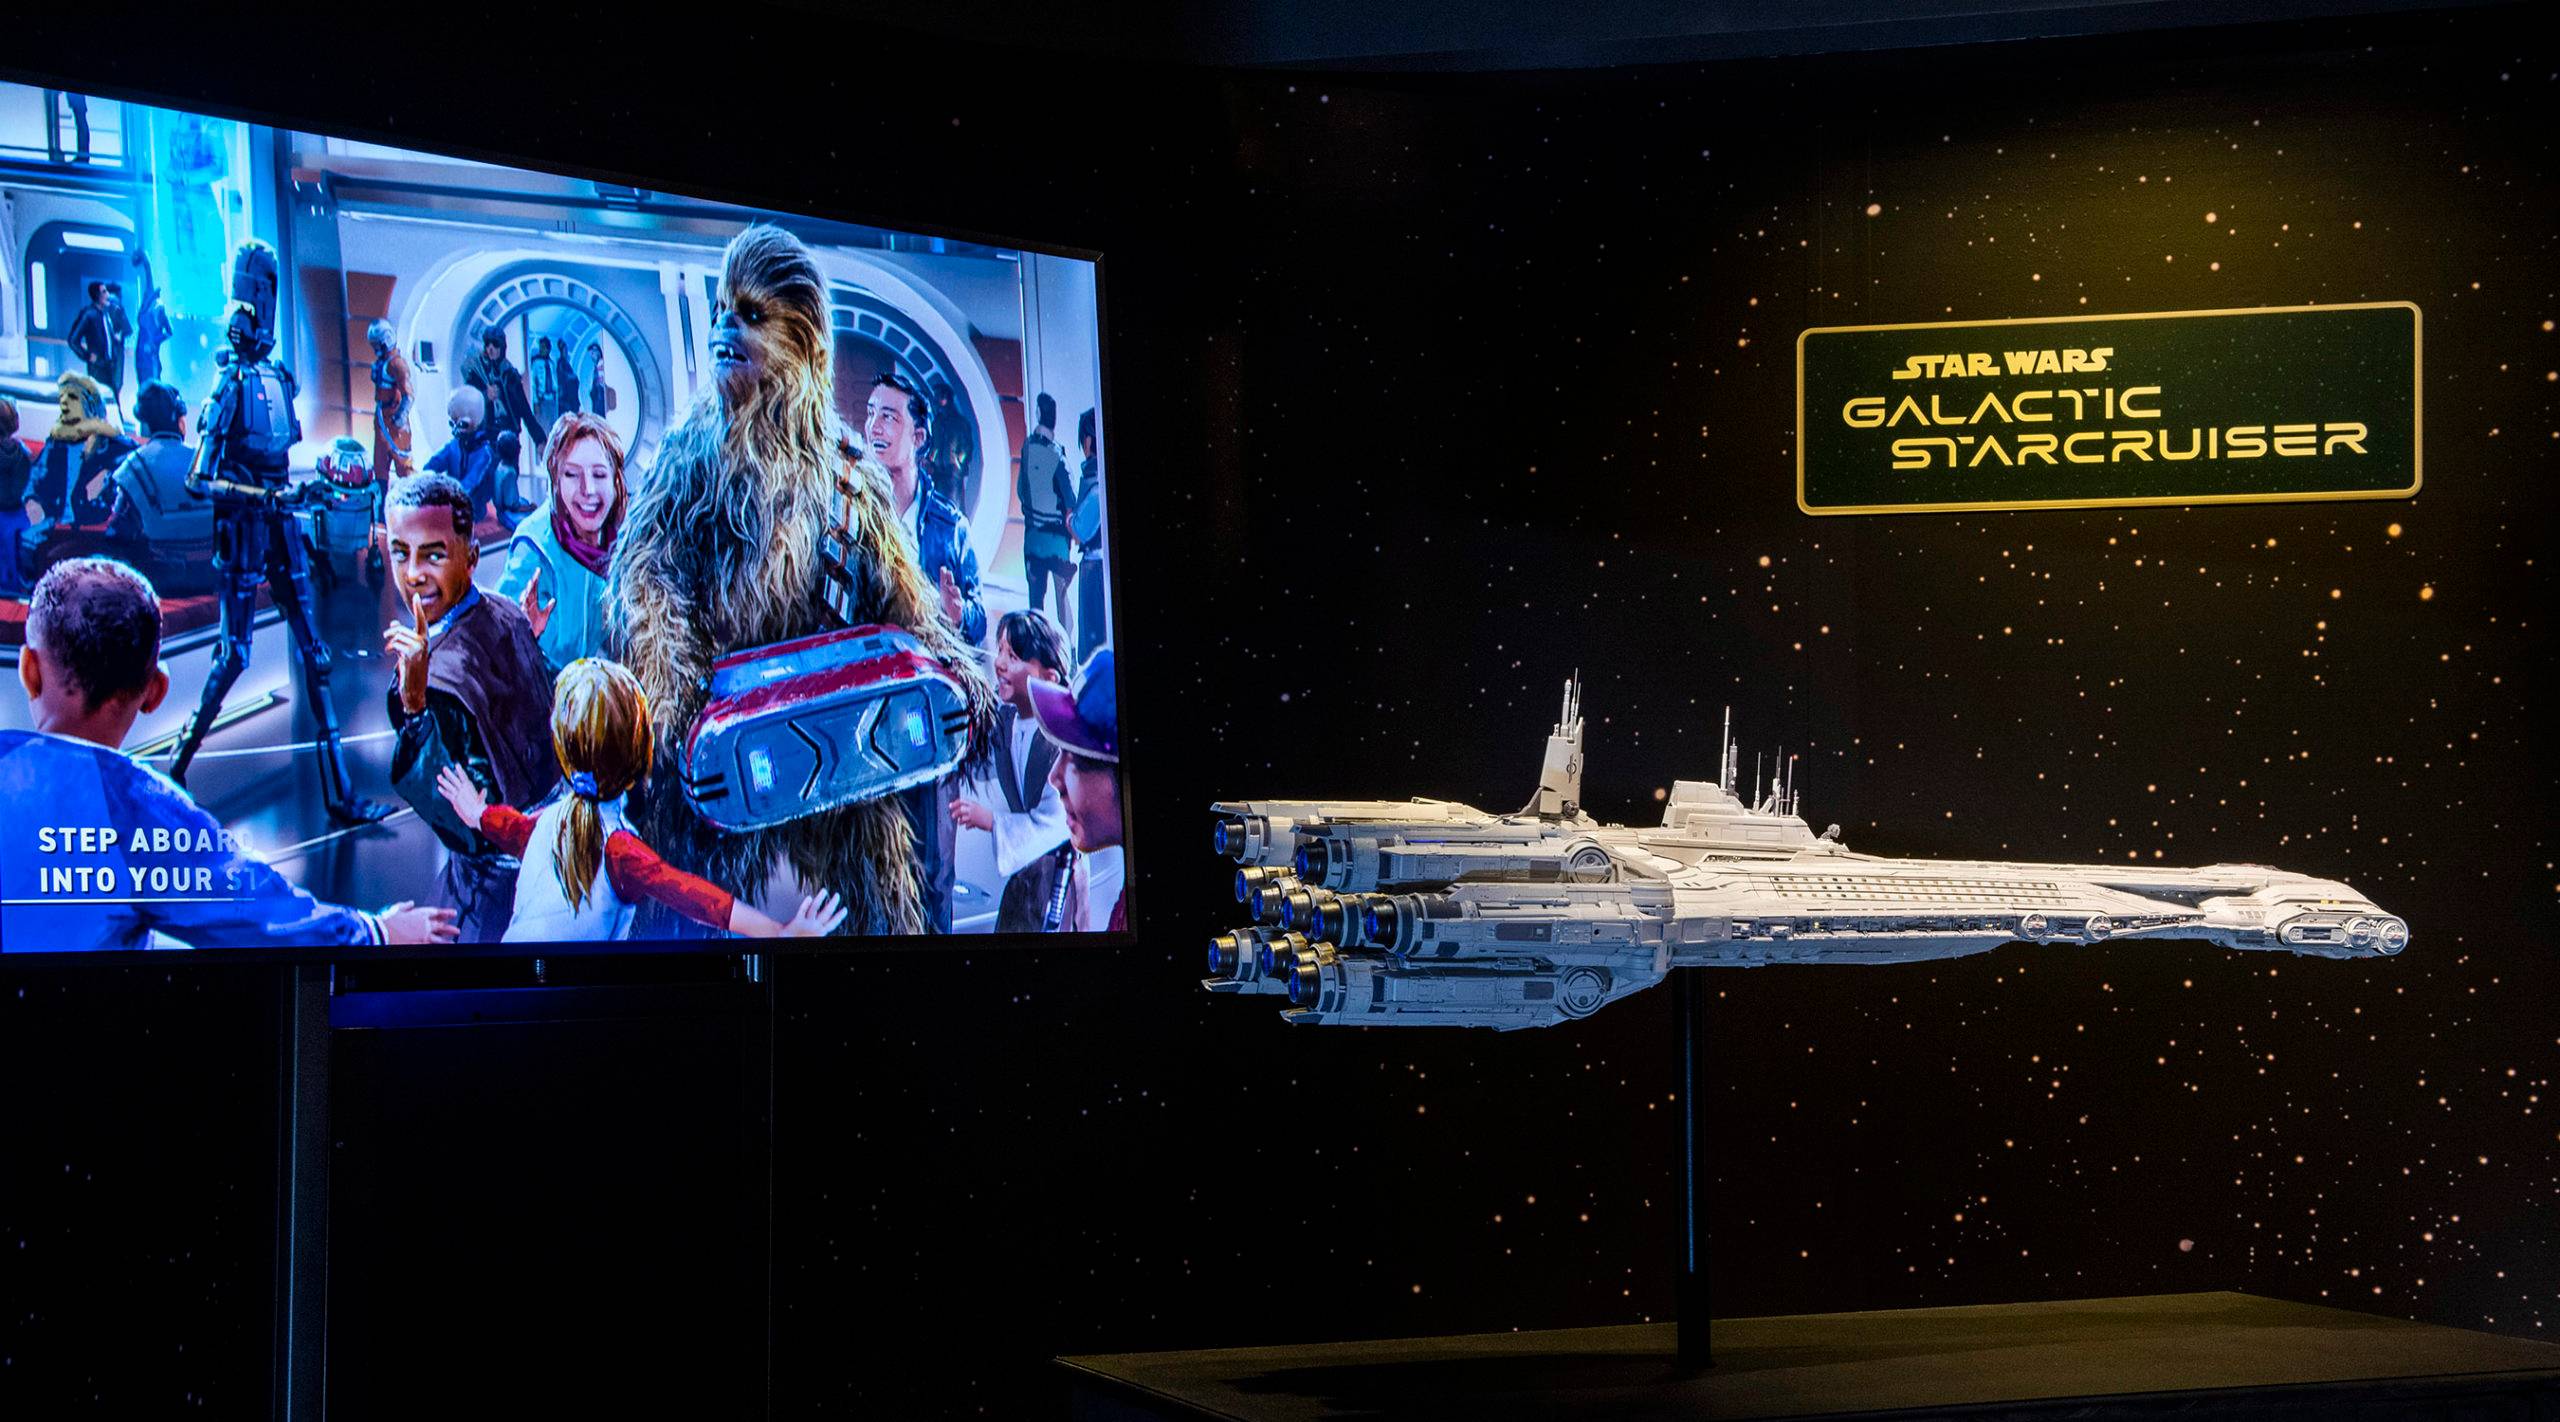 Star Wars Galactic Starcruiser model now on display inside Walt Disney Presents at Disney's Hollywood Studios